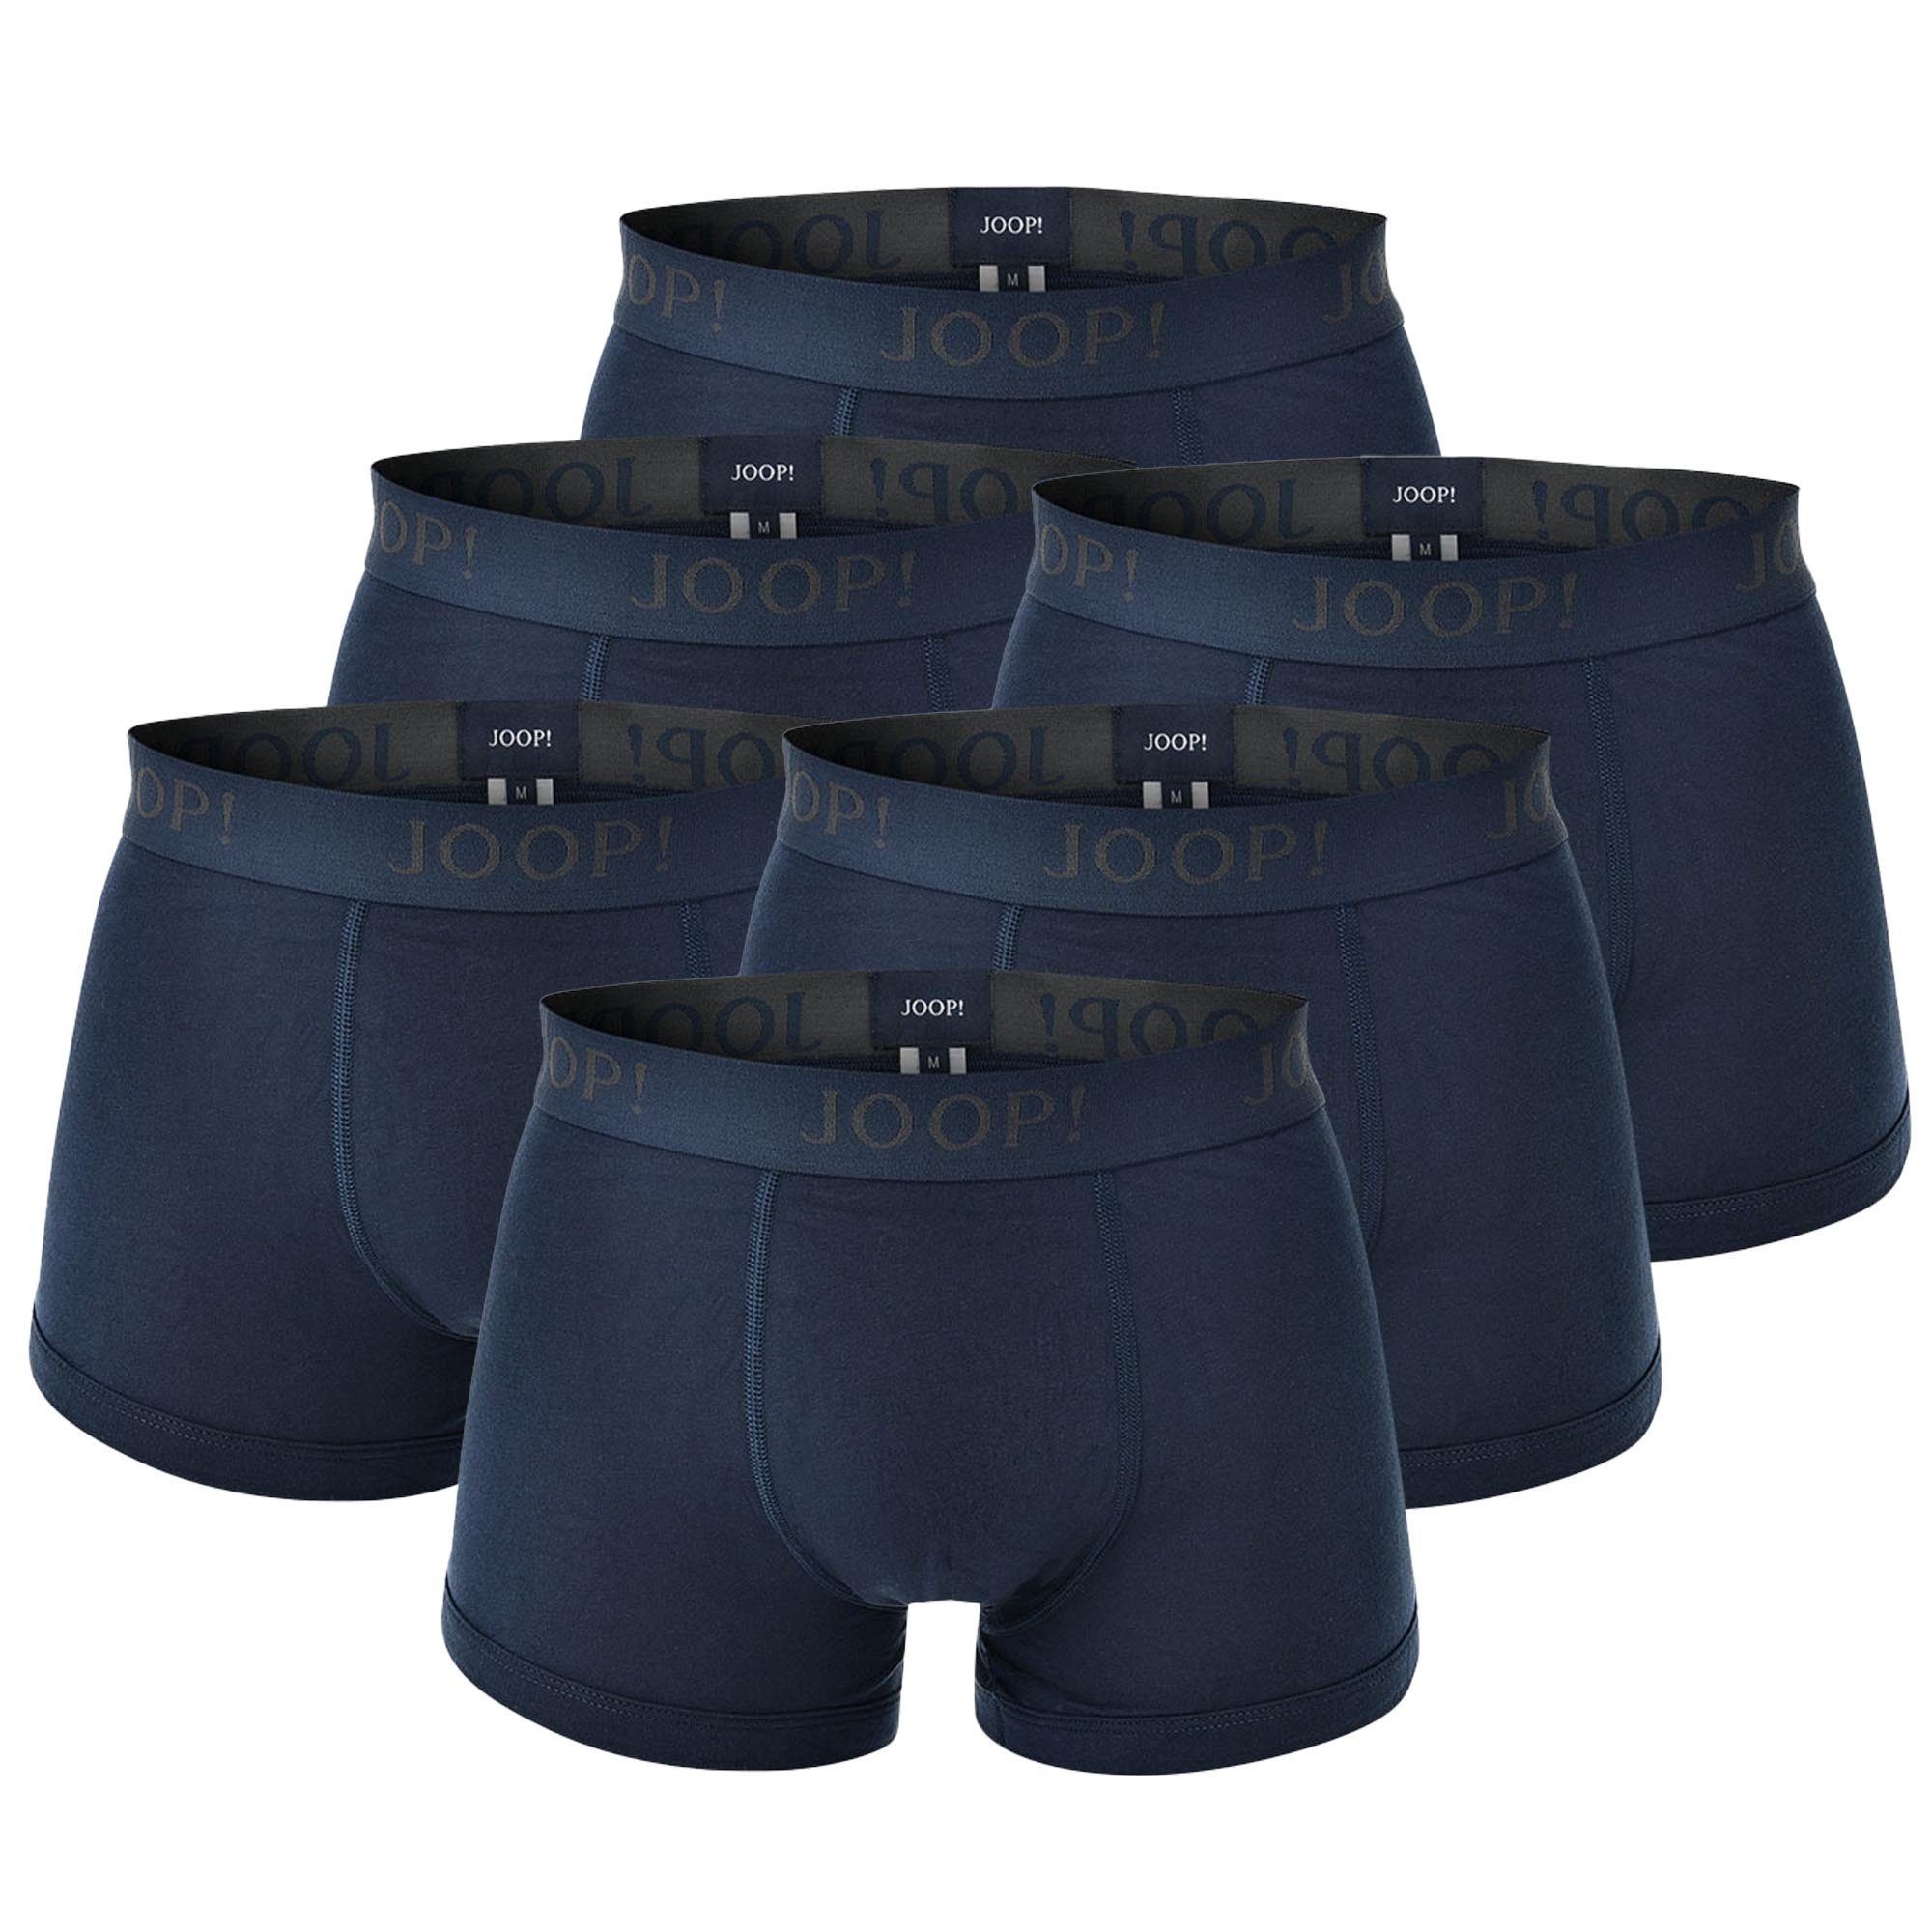 Joop! Boxer Herren Boxer Shorts, 6er Pack - Fine Cotton Blau